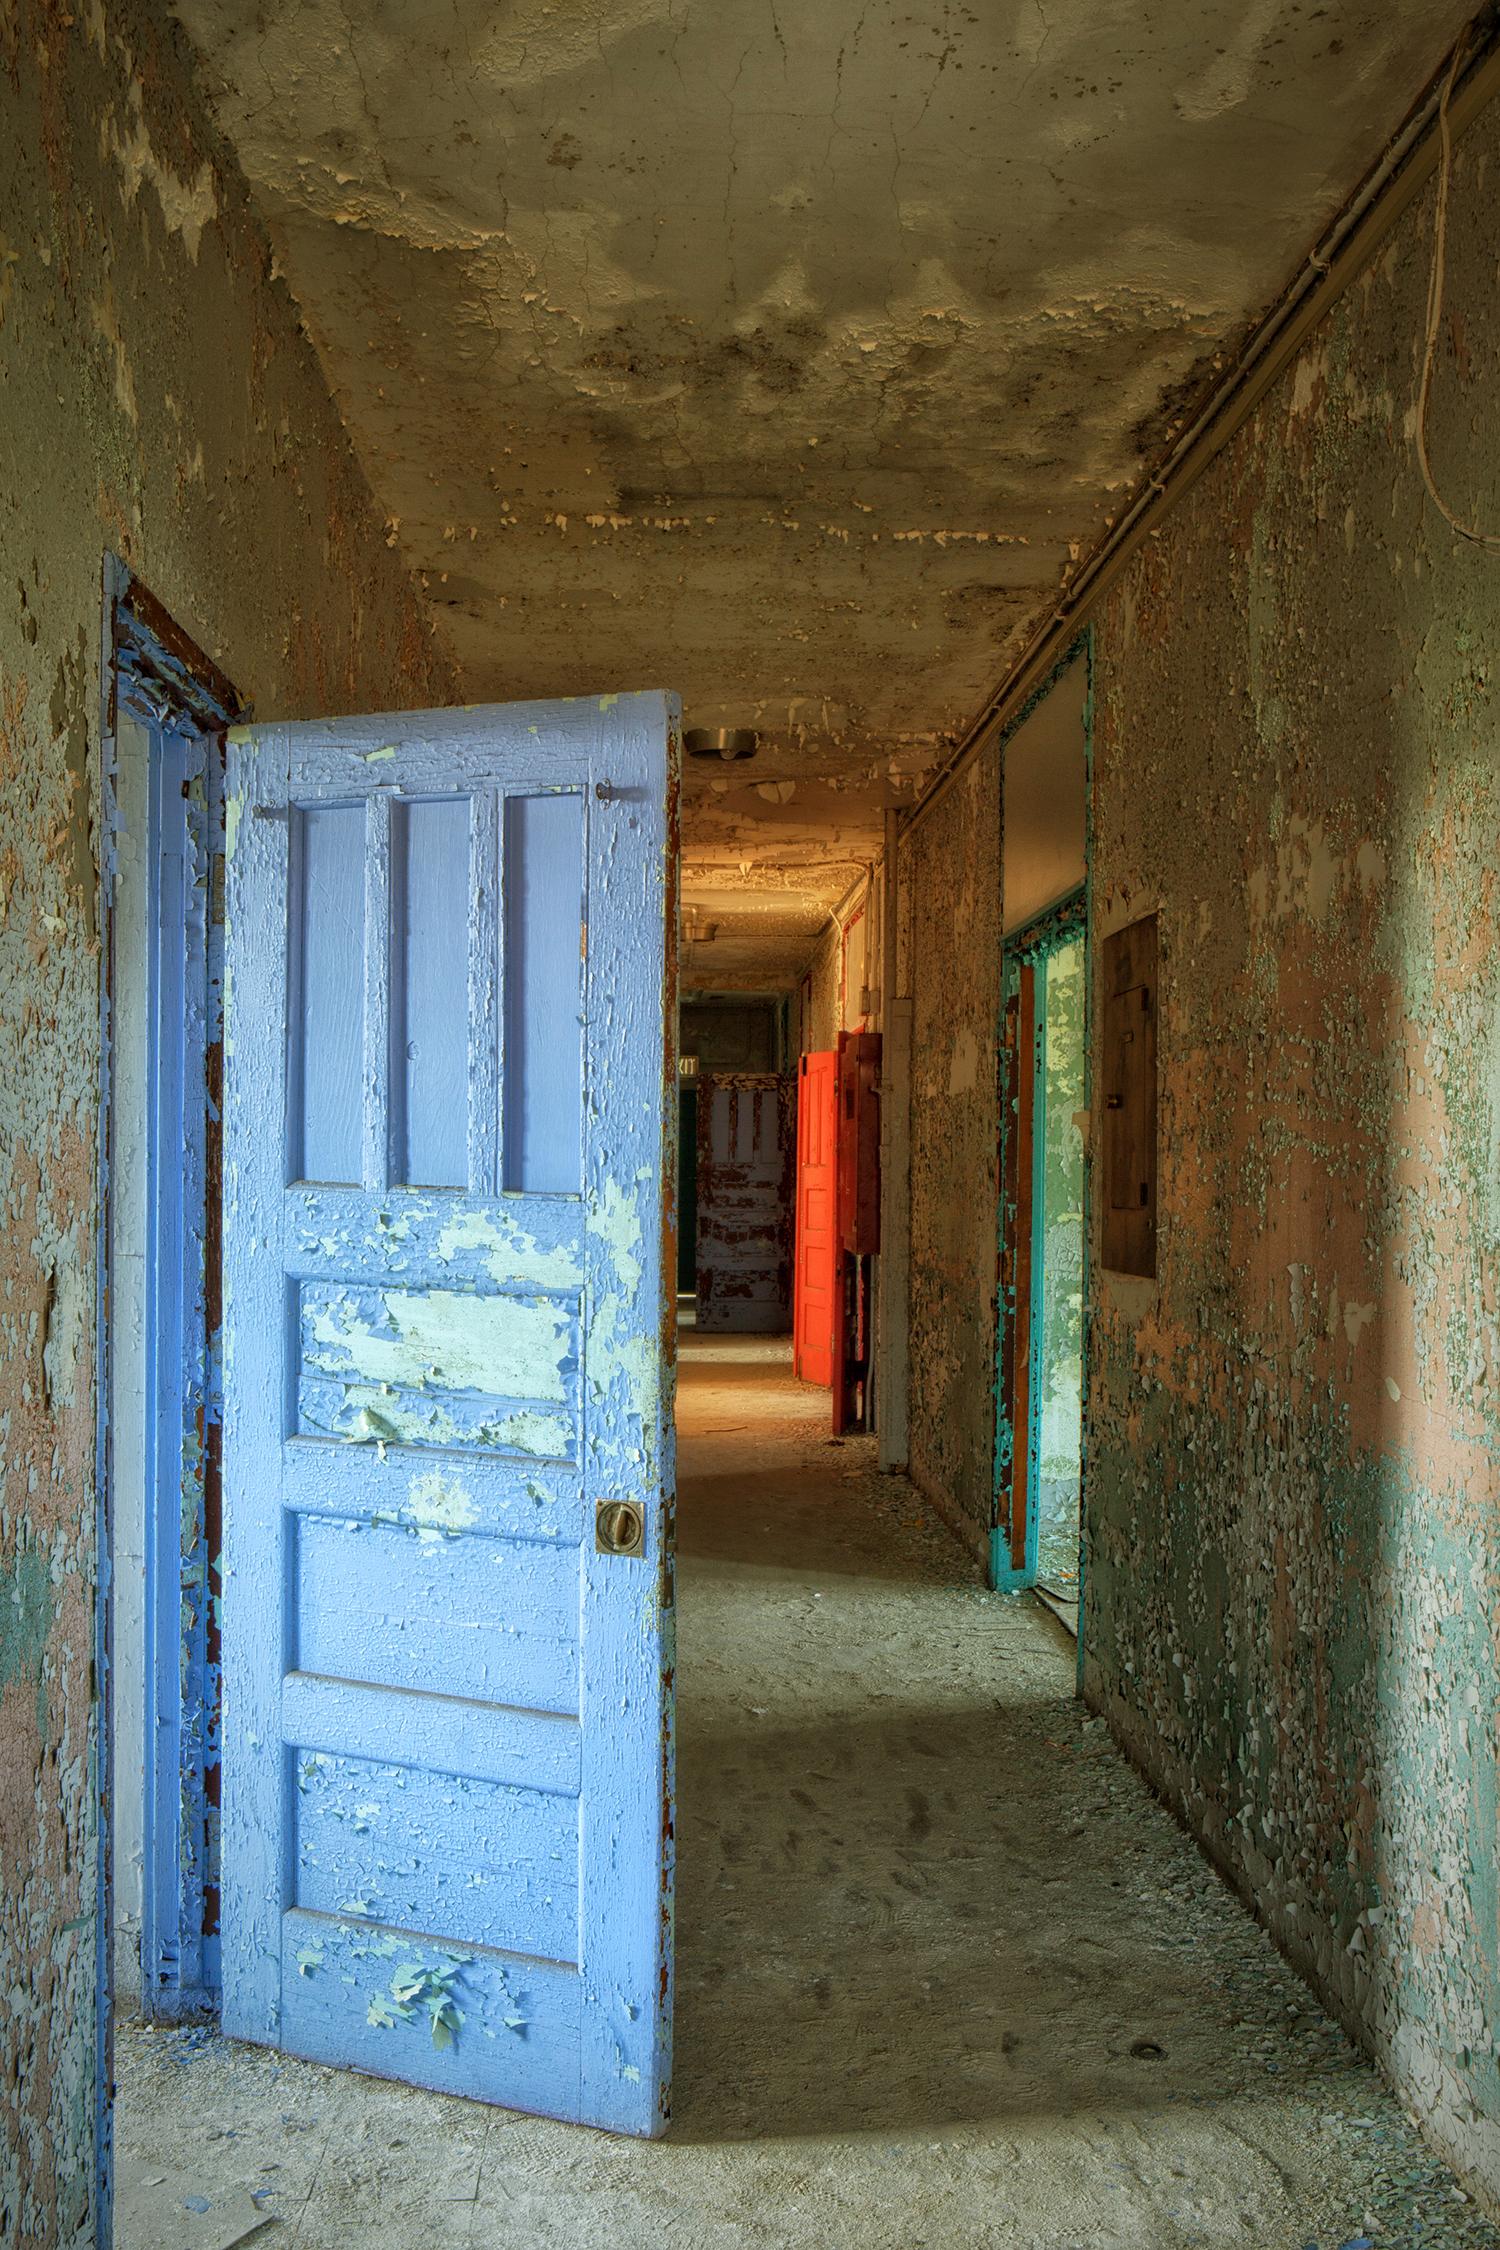 Rebecca Skinner Still-Life Photograph - "West Hallway", color photo, abandoned, metal print, door, blue, red, purple